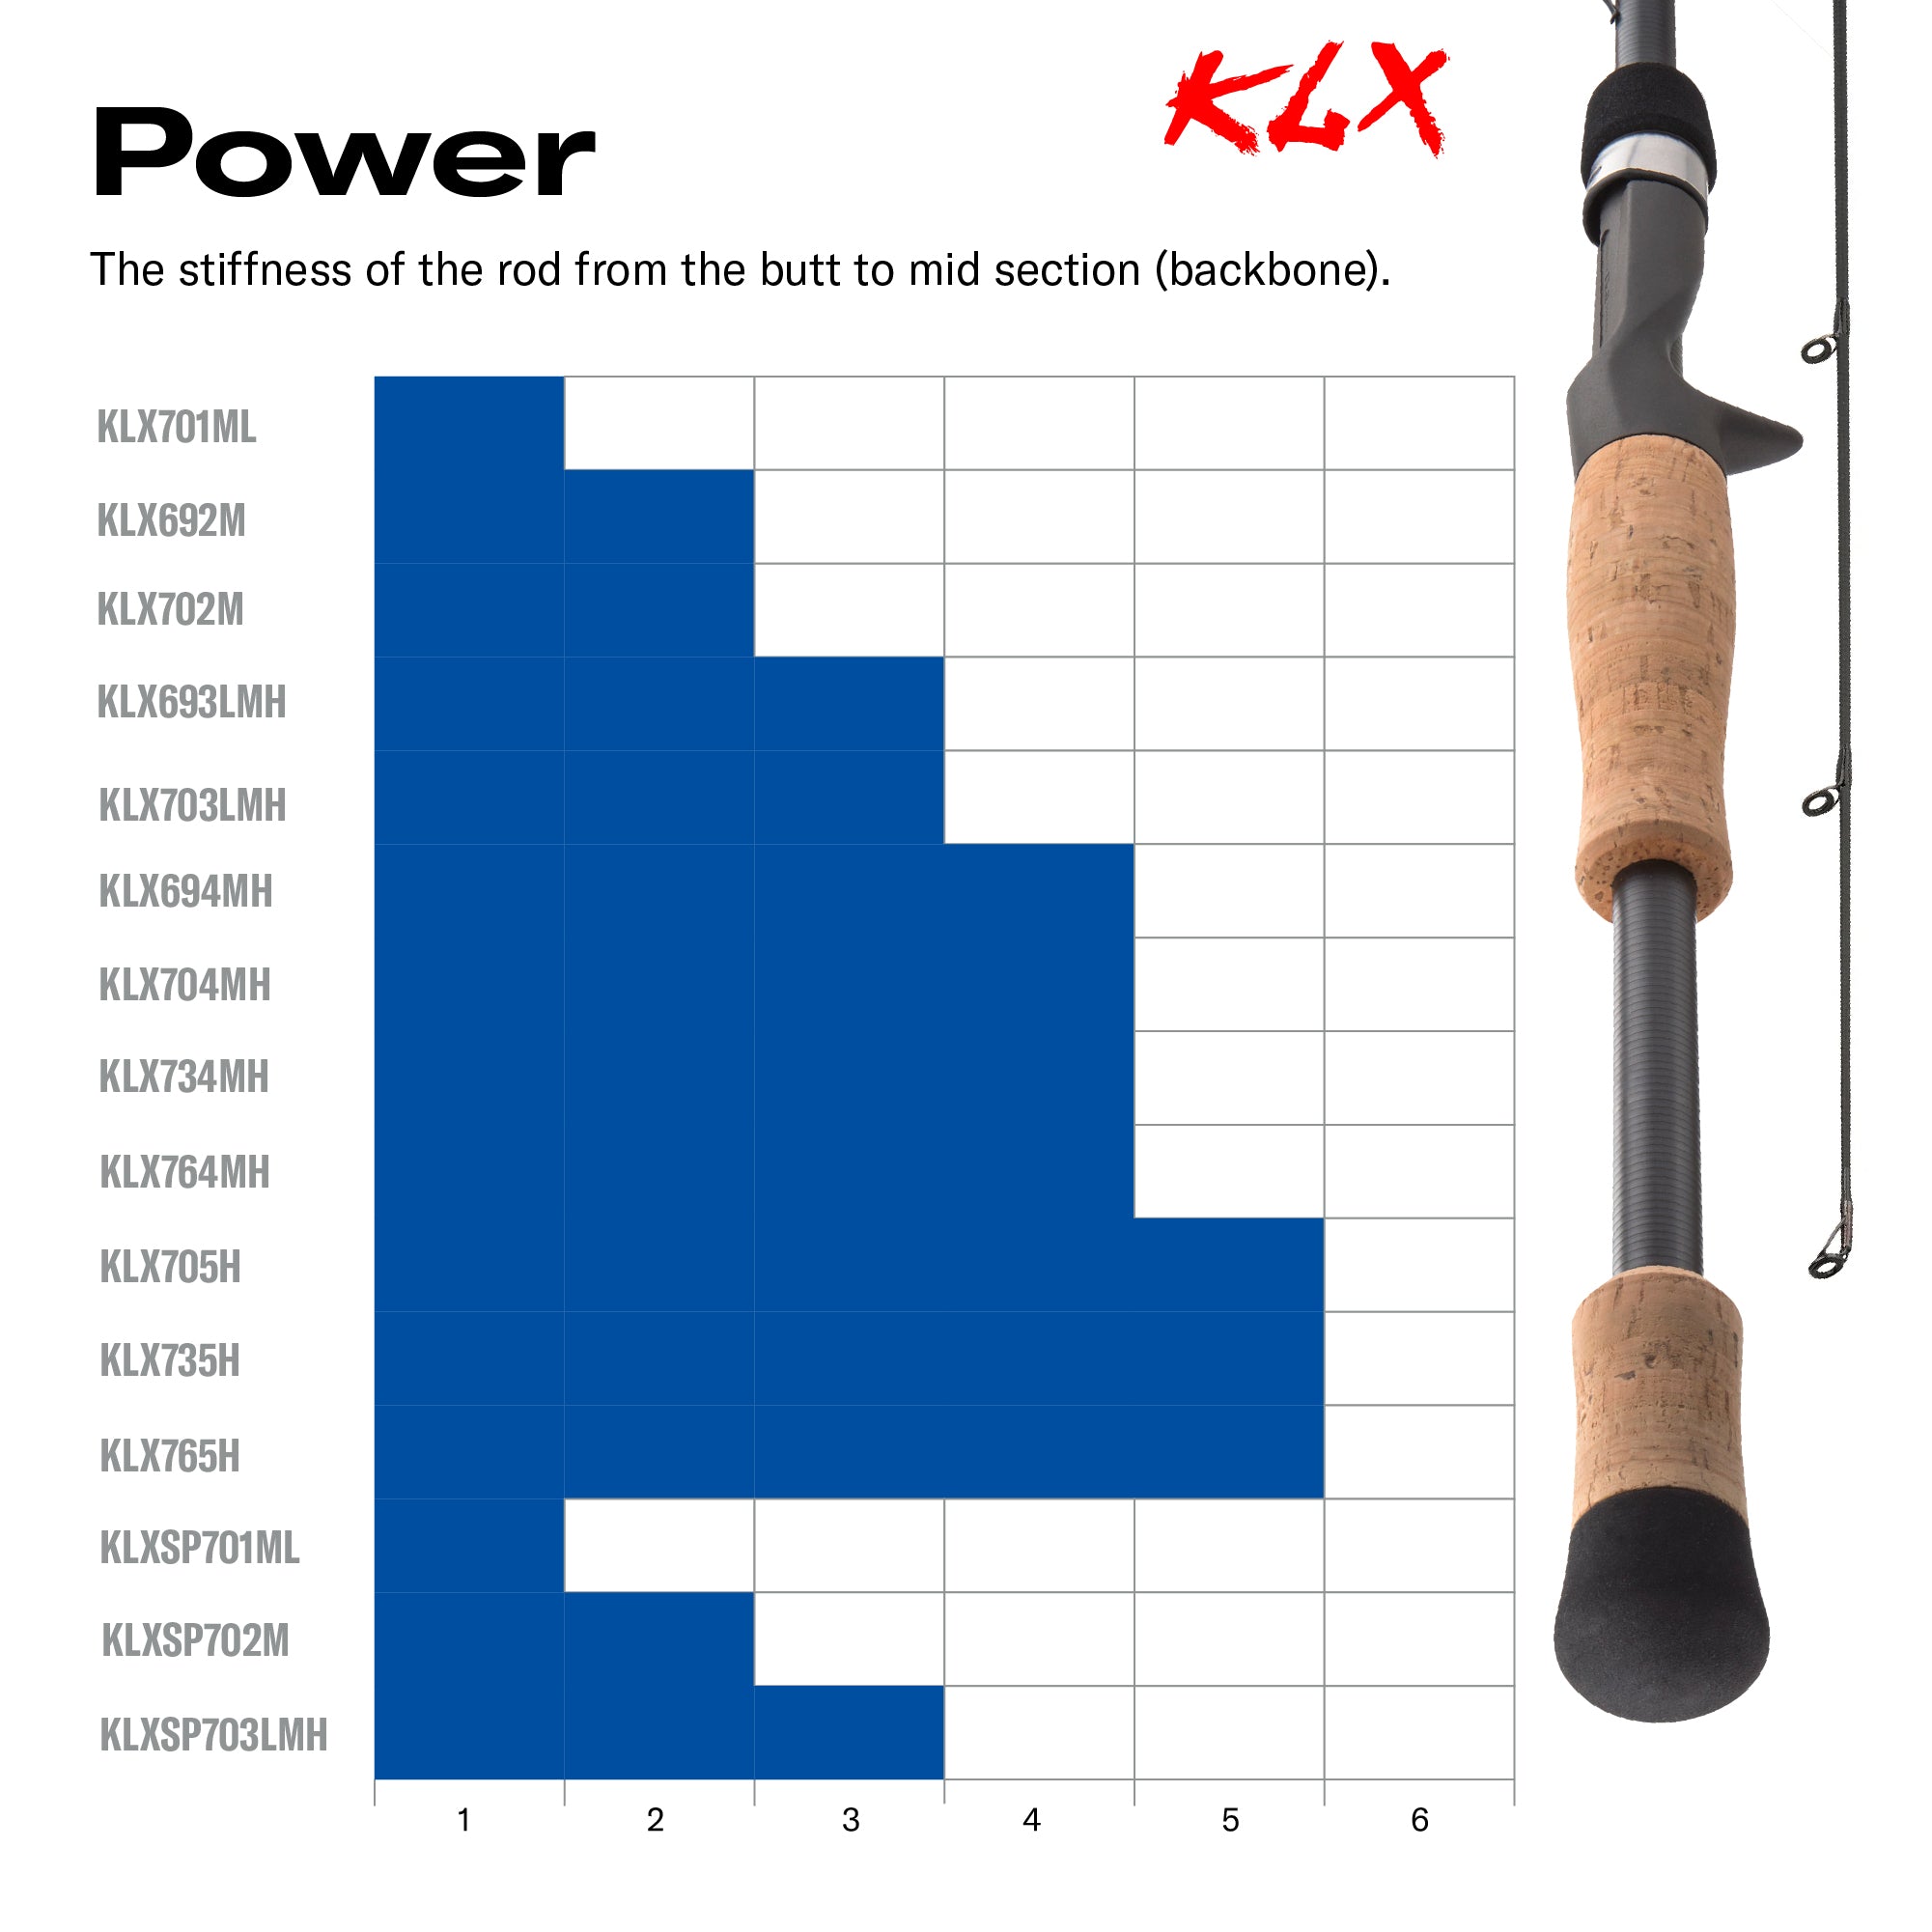 Kistler Klx734mh KLX 7'3 inch 4 MH Medium Heavy Moderate Fast Action Casting Rod